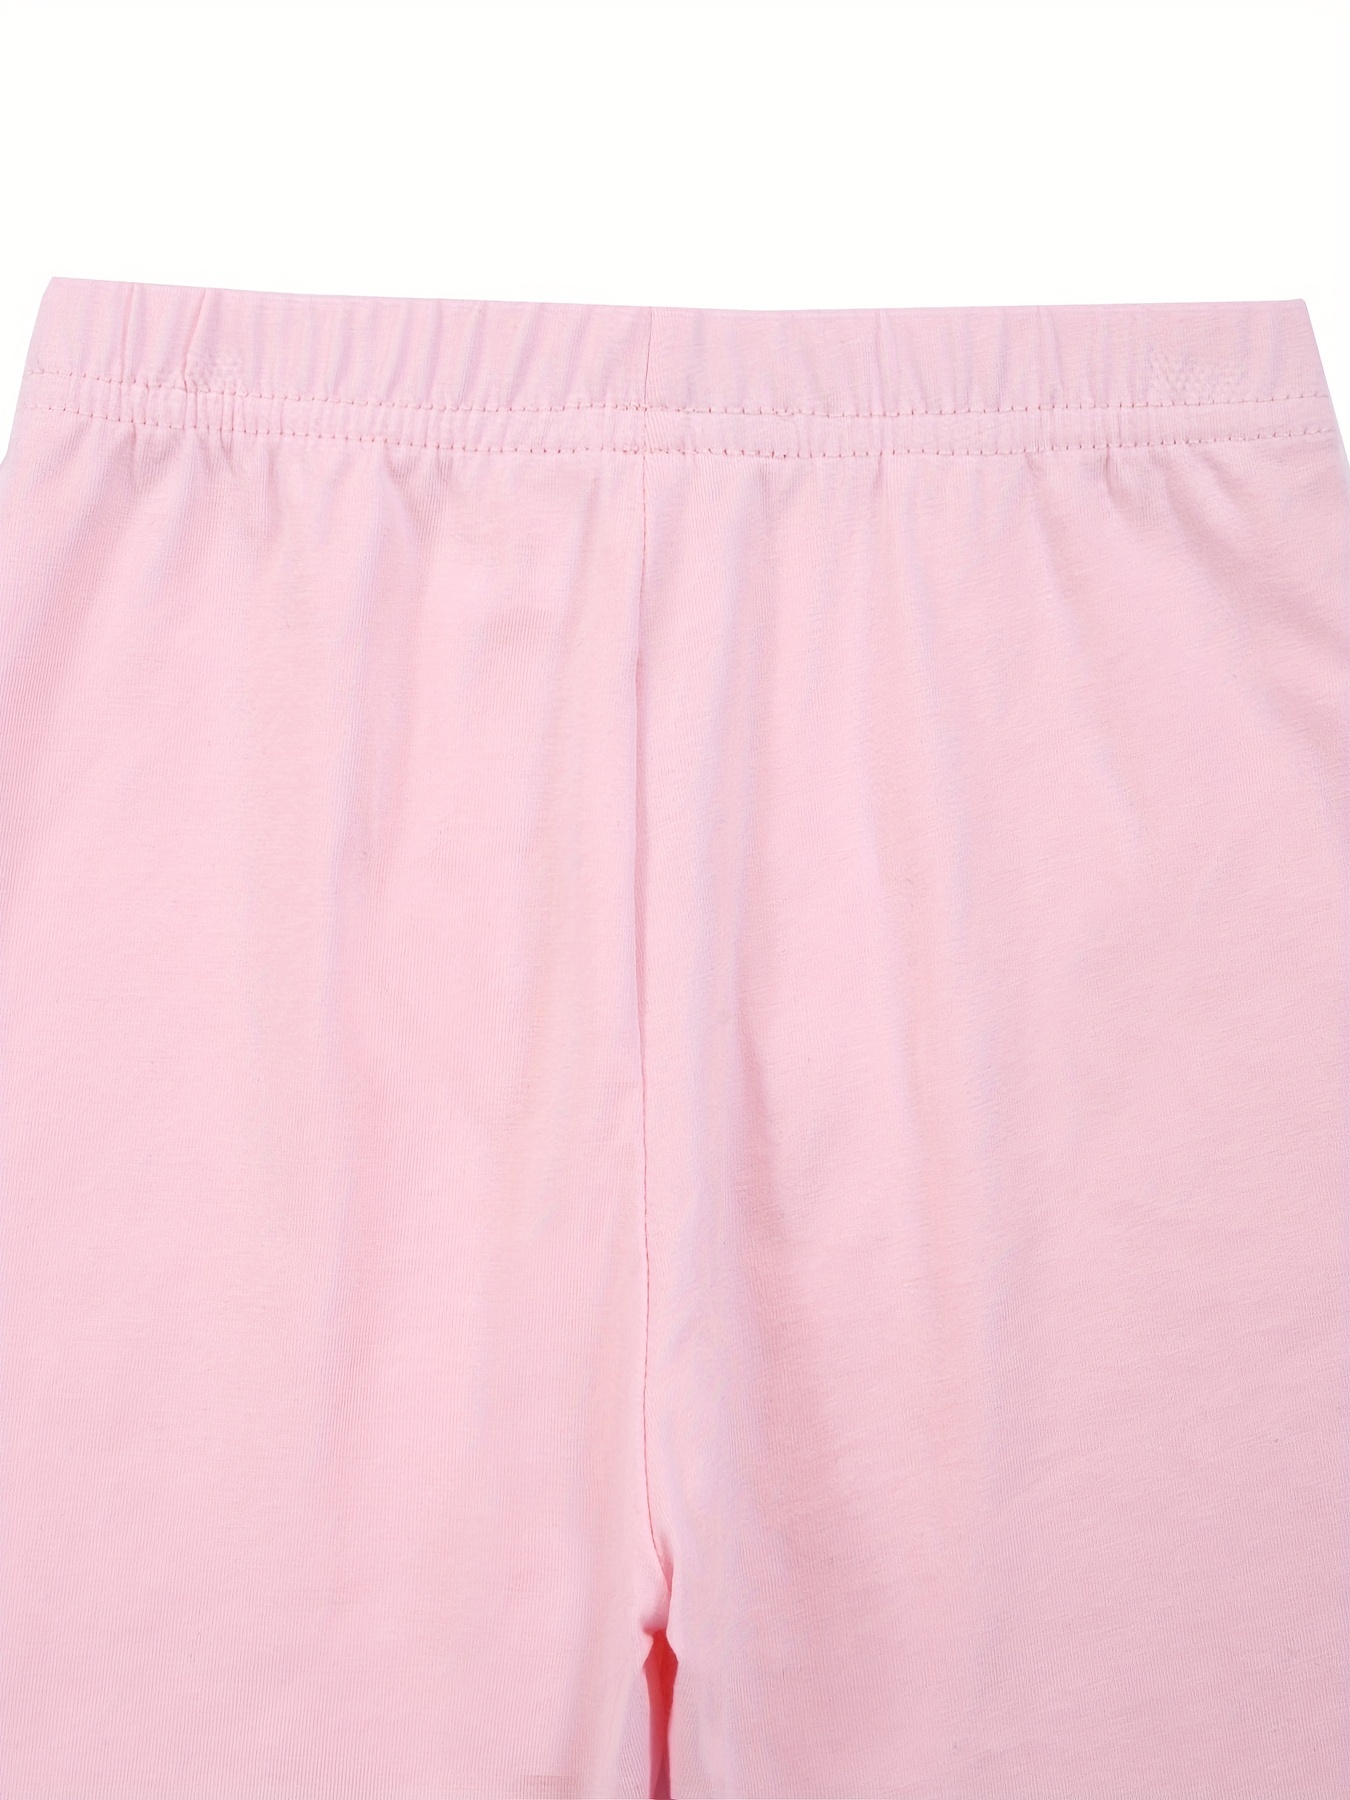 Girls Soft Cotton Long Bike Shorts | Hot Pink, 8Y / Hot Pink